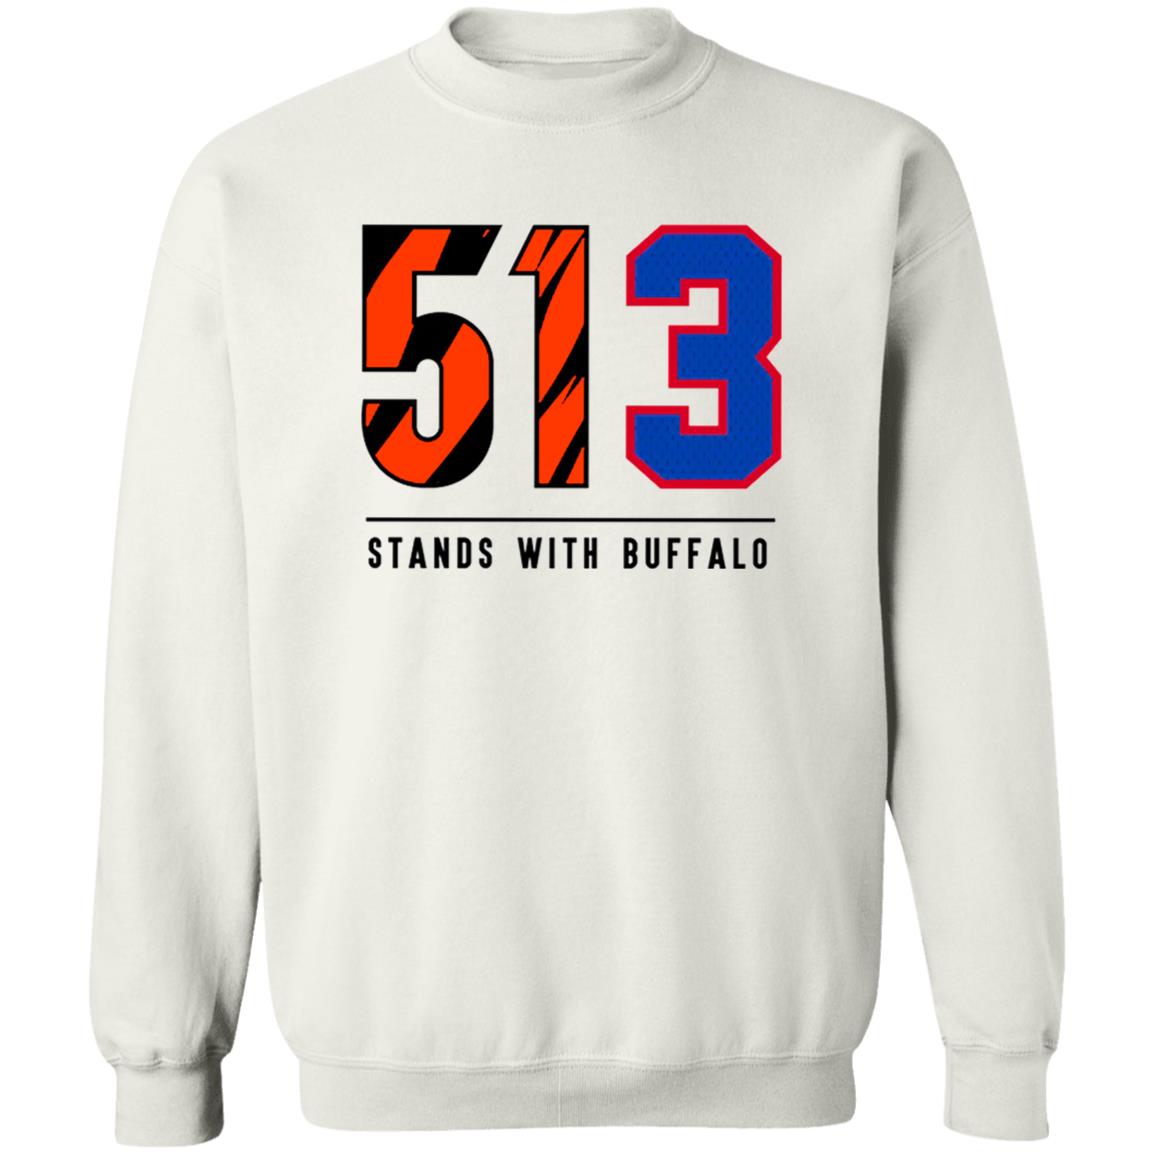 513 STANDS WITH BUFFALO SHIRT Cincinnati Bengals, Damar Hamlin